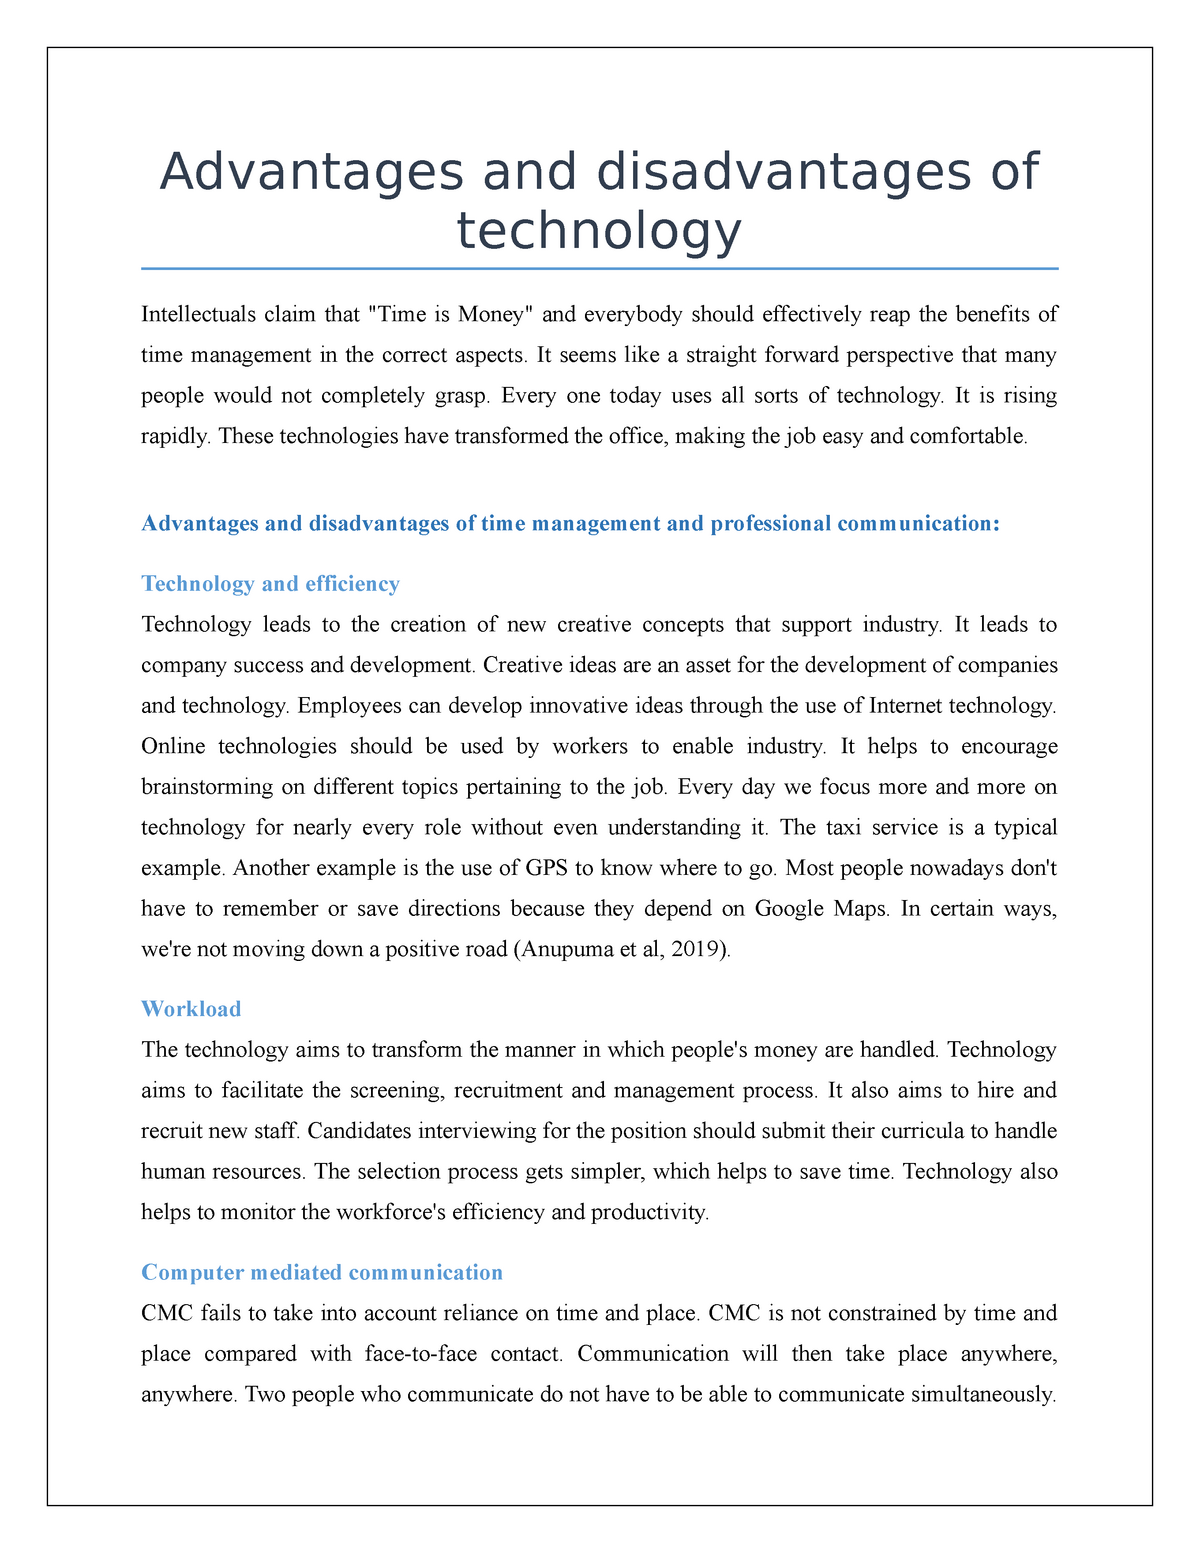 essay advantages and disadvantages technology